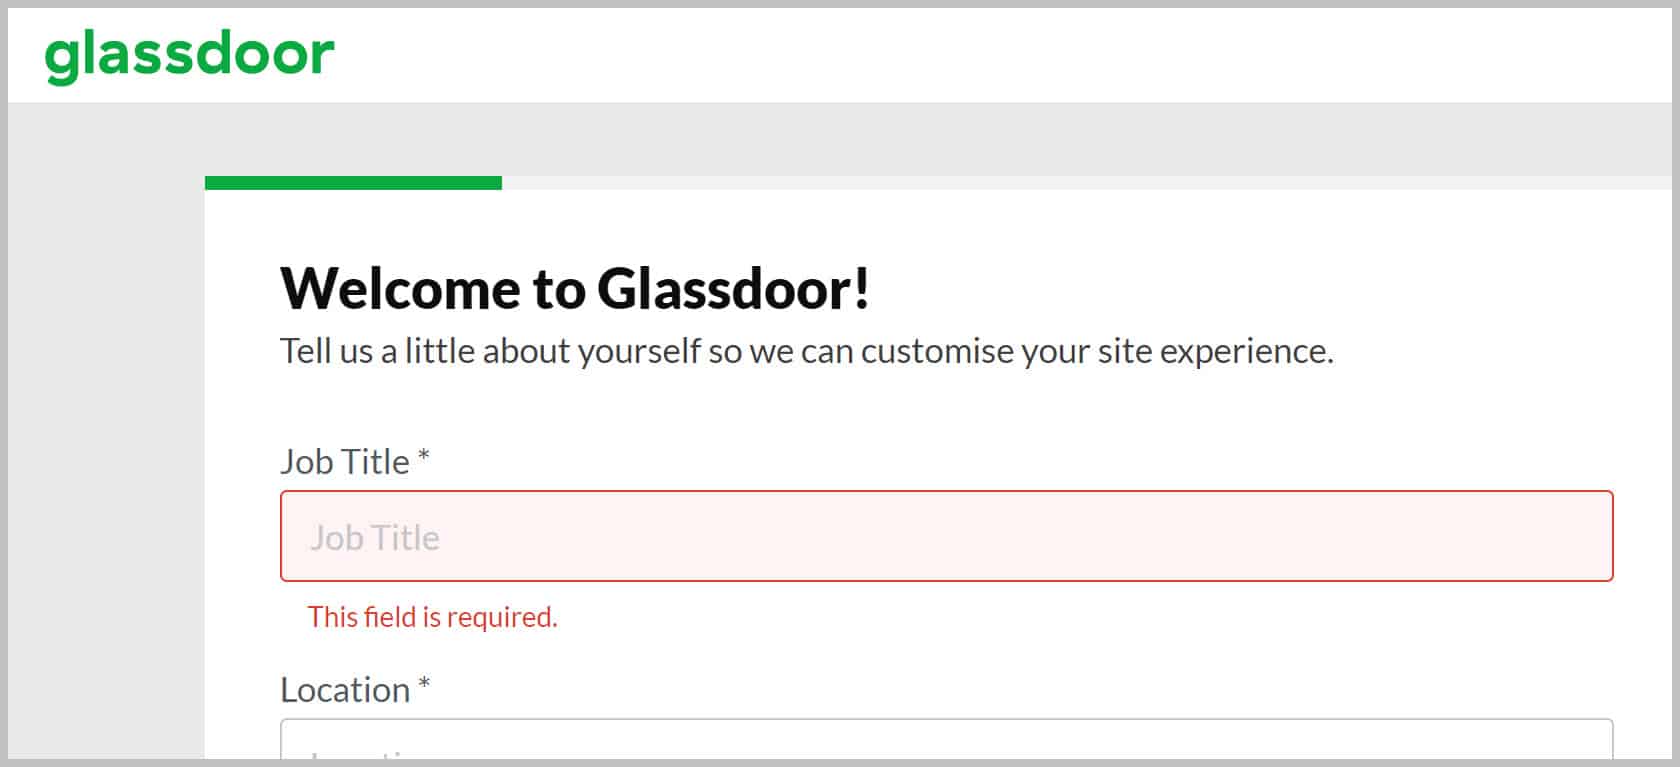 Glassdoors Home Page